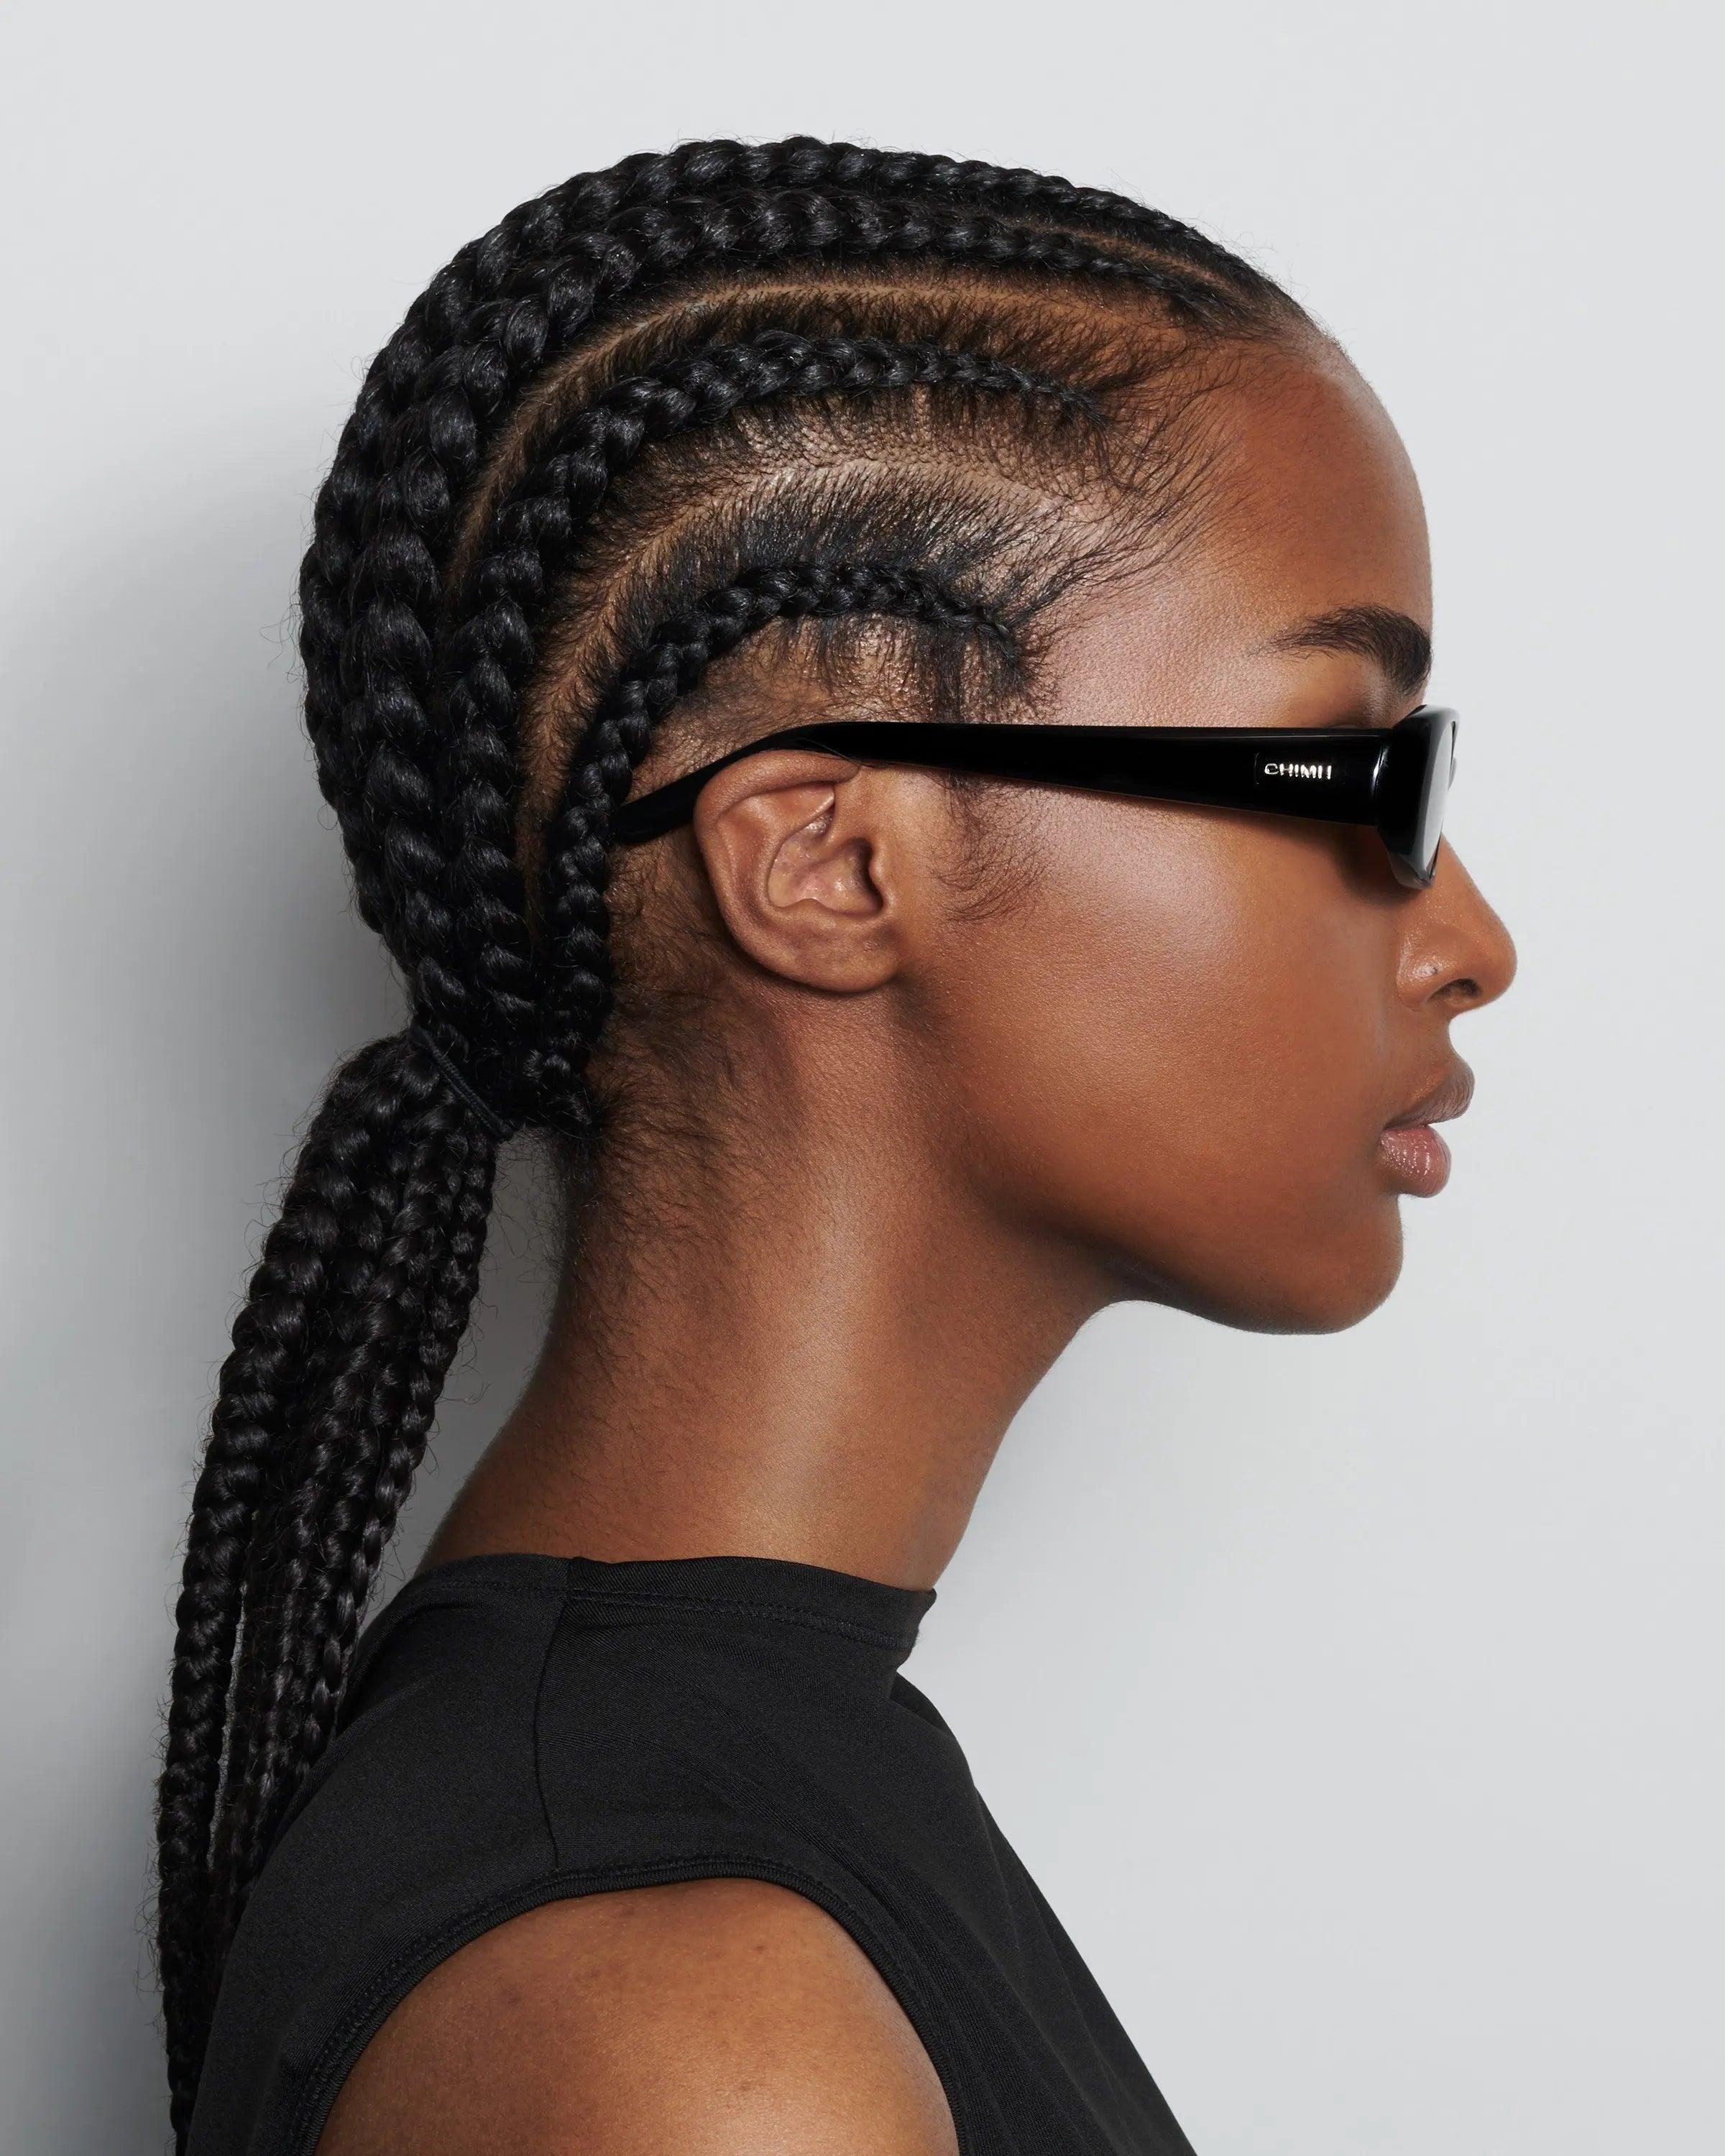 CHIMI LHR - Black - One size - Sunglasses